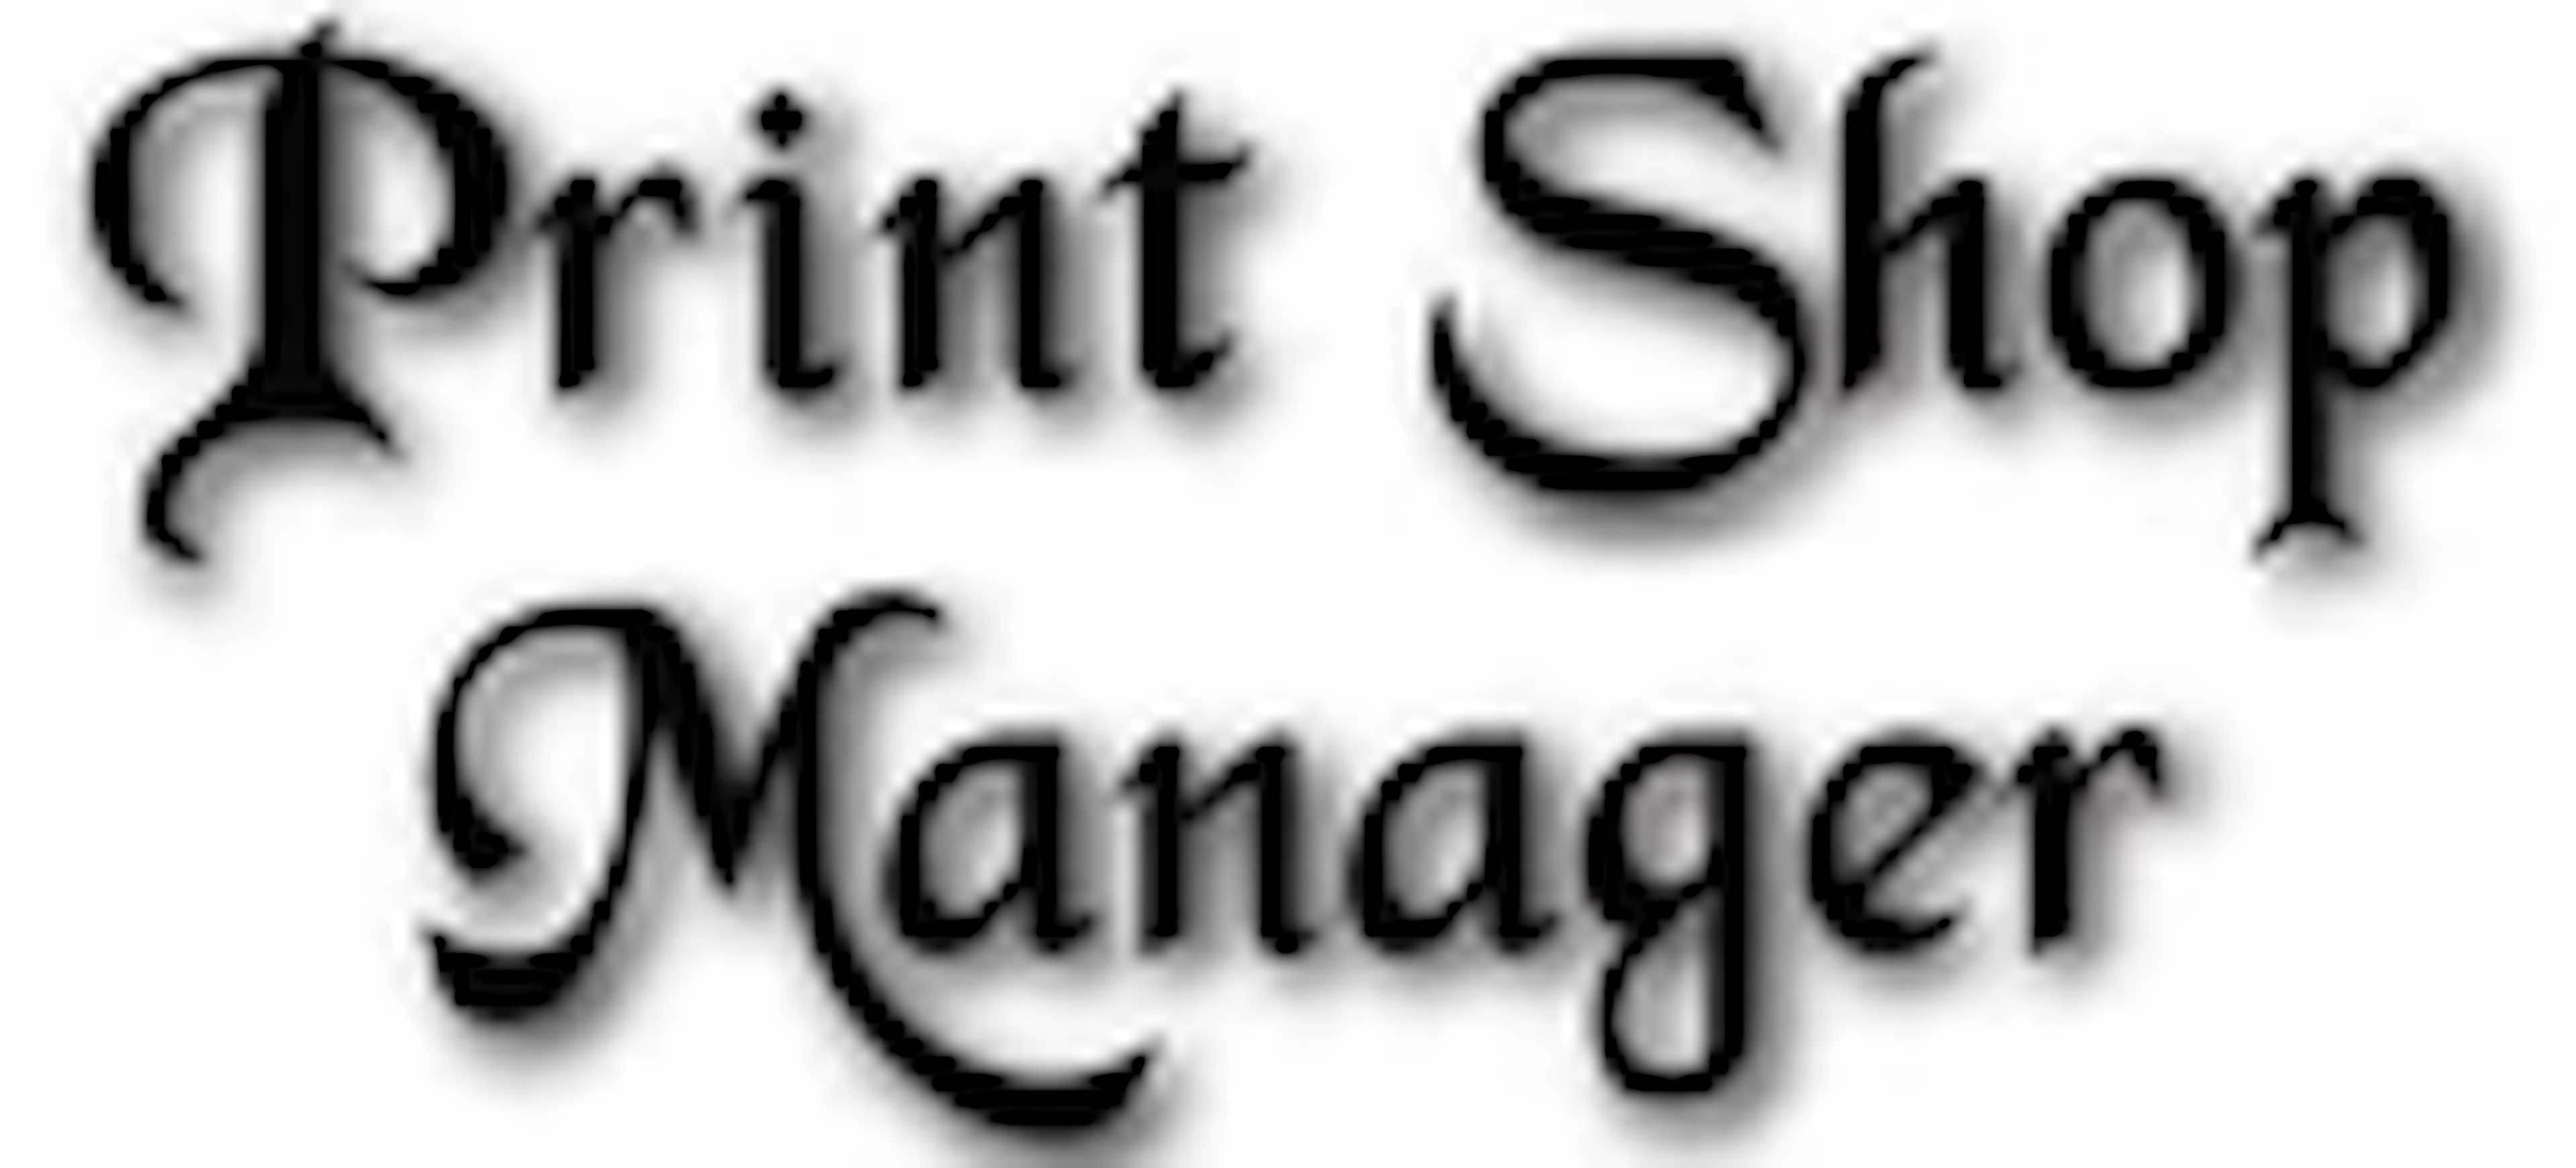 Print Shop Manager Logo